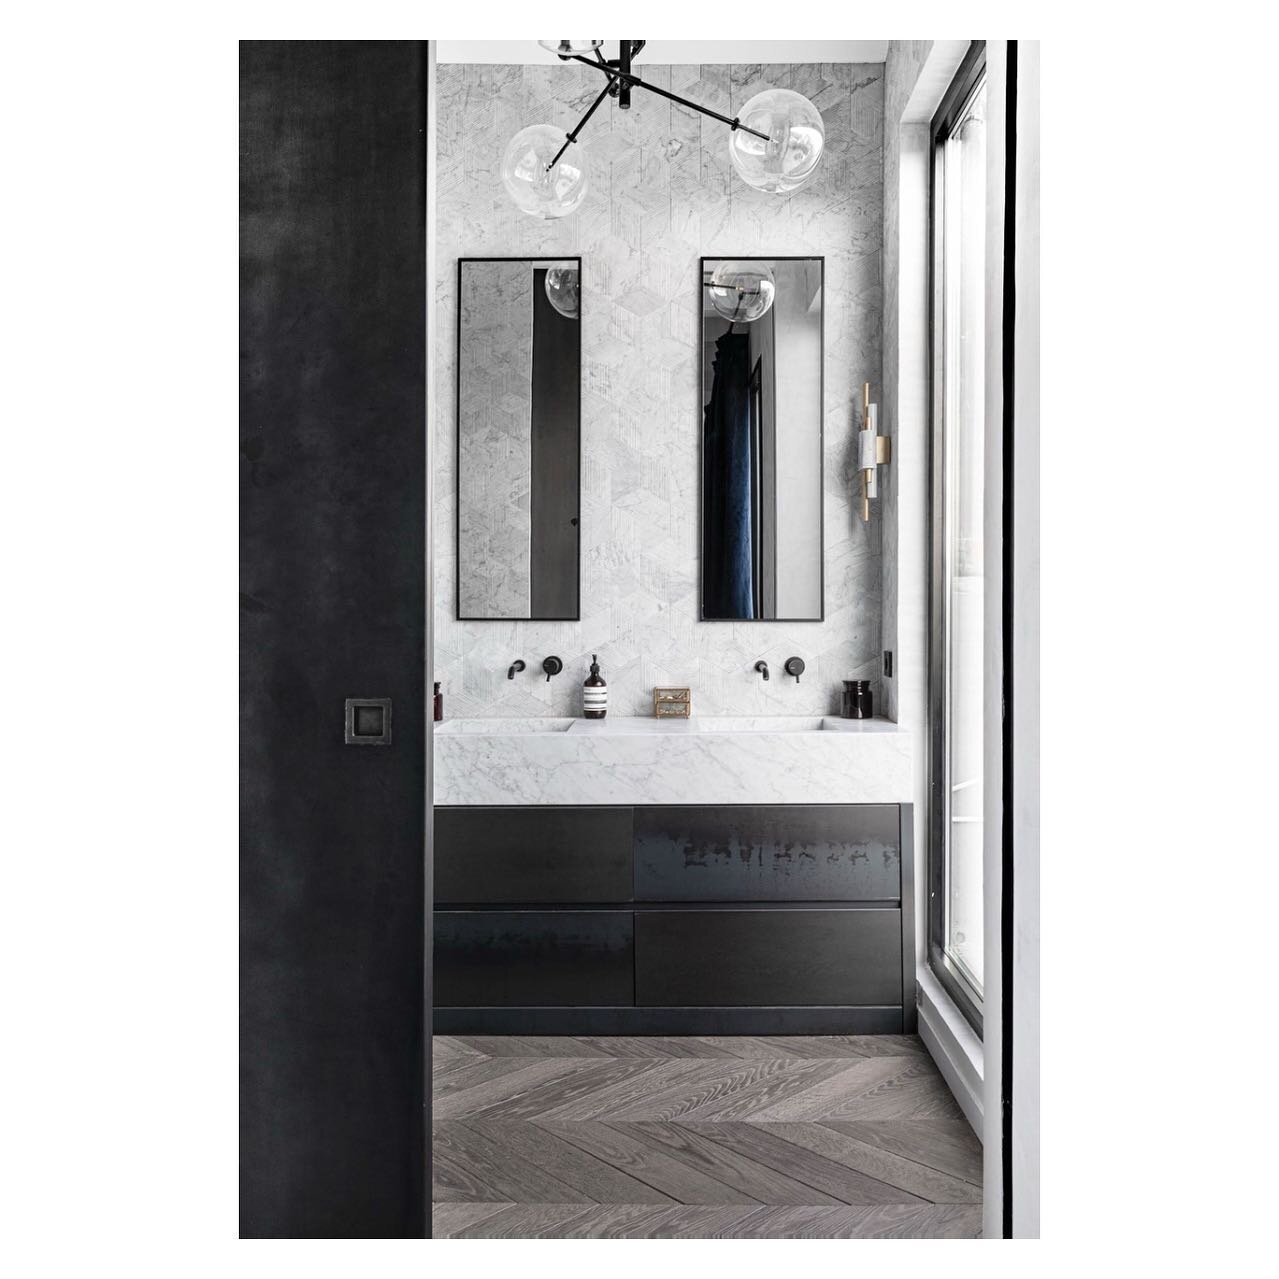 Project in Barcelona - Eixample  #marblebathroom #salvatori #marble #bathroomdesign #interiordesign #interior #design #barcelona #peggybels 📷 @camiloc_villegas